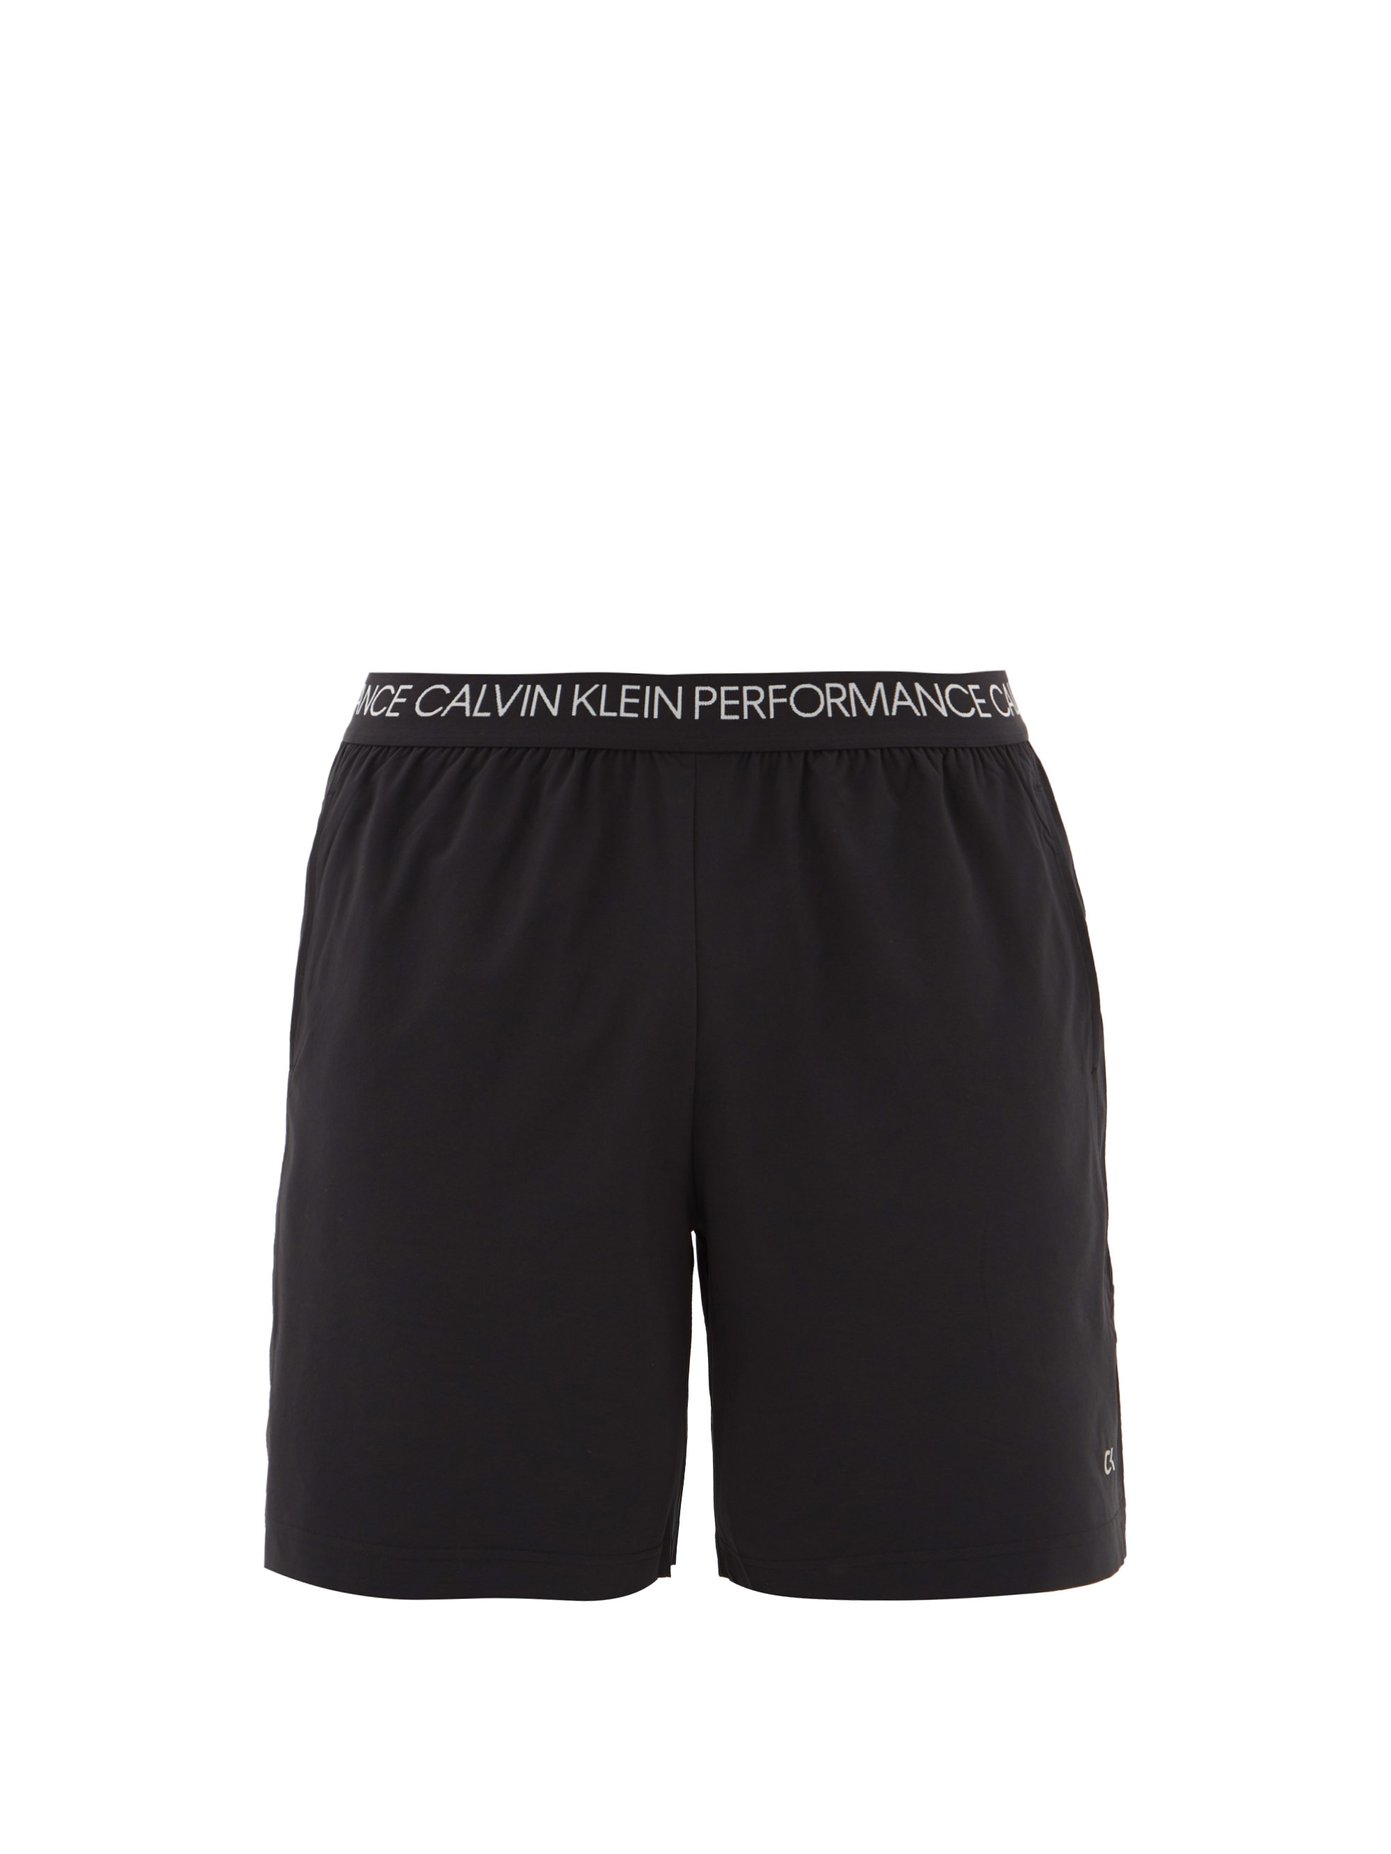 calvin klein jersey shorts